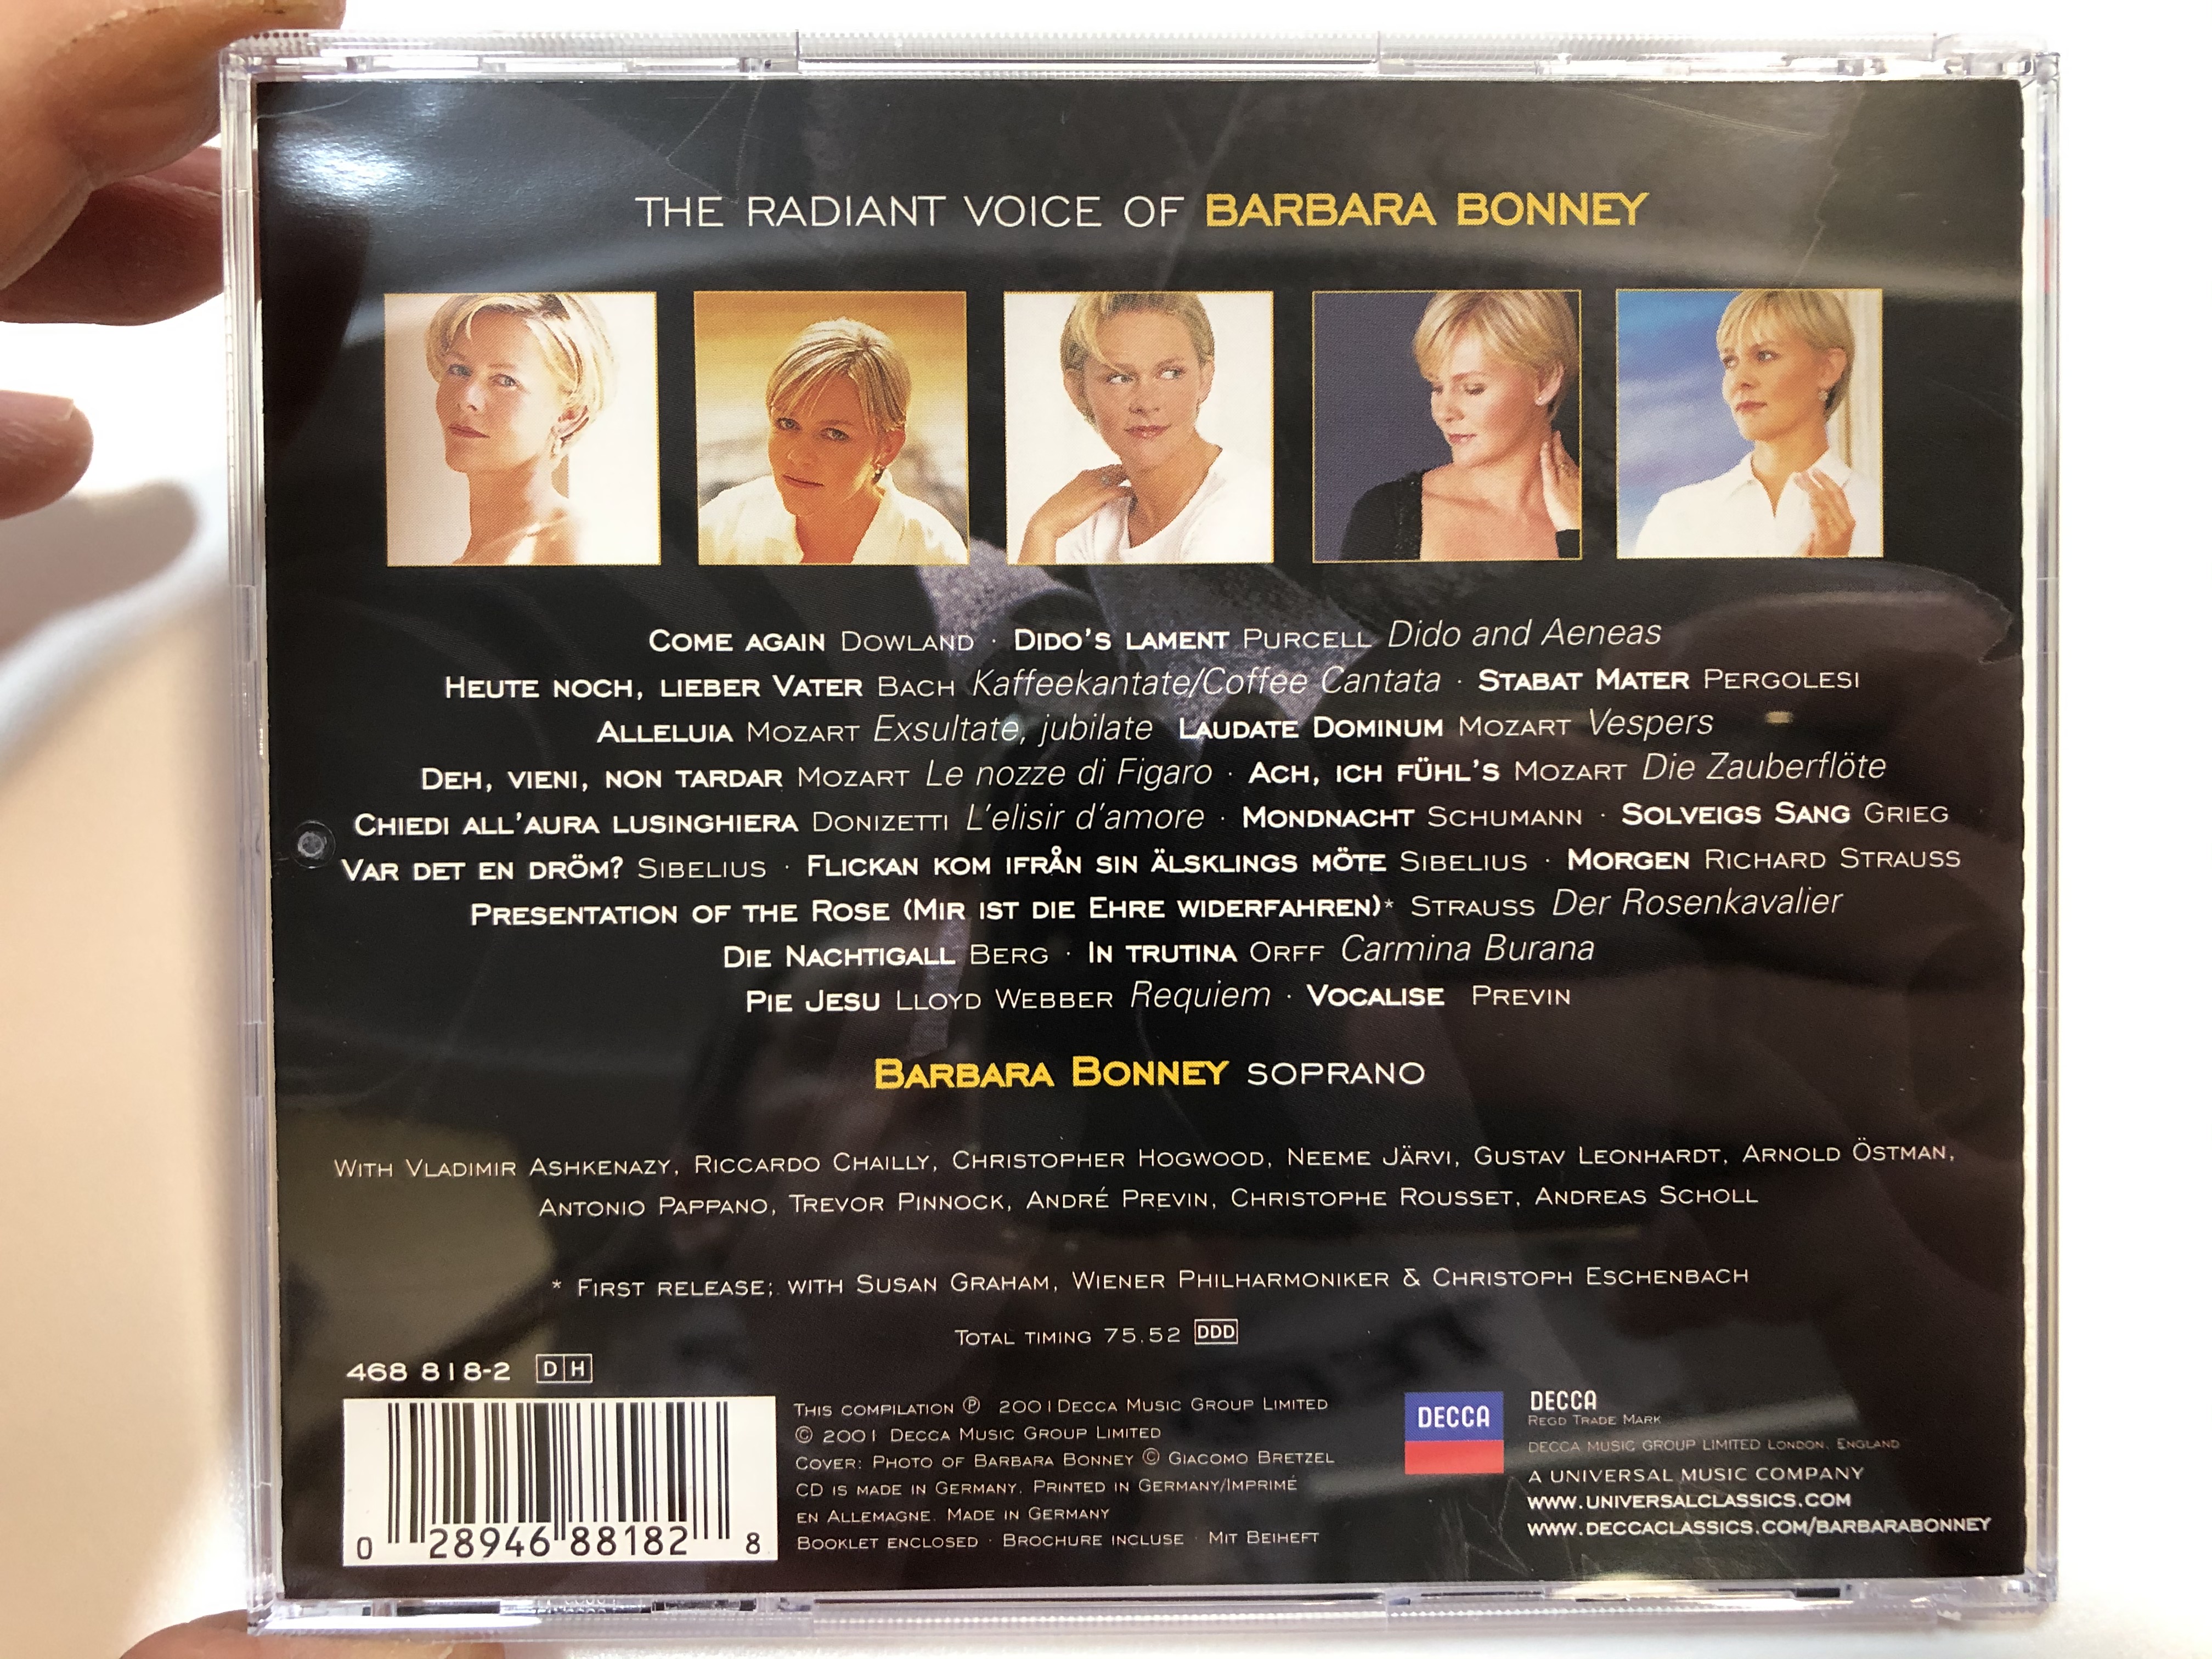 the-radiant-voice-of-barbara-bonney-decca-audio-cd-2001-468-818-2-2-.jpg